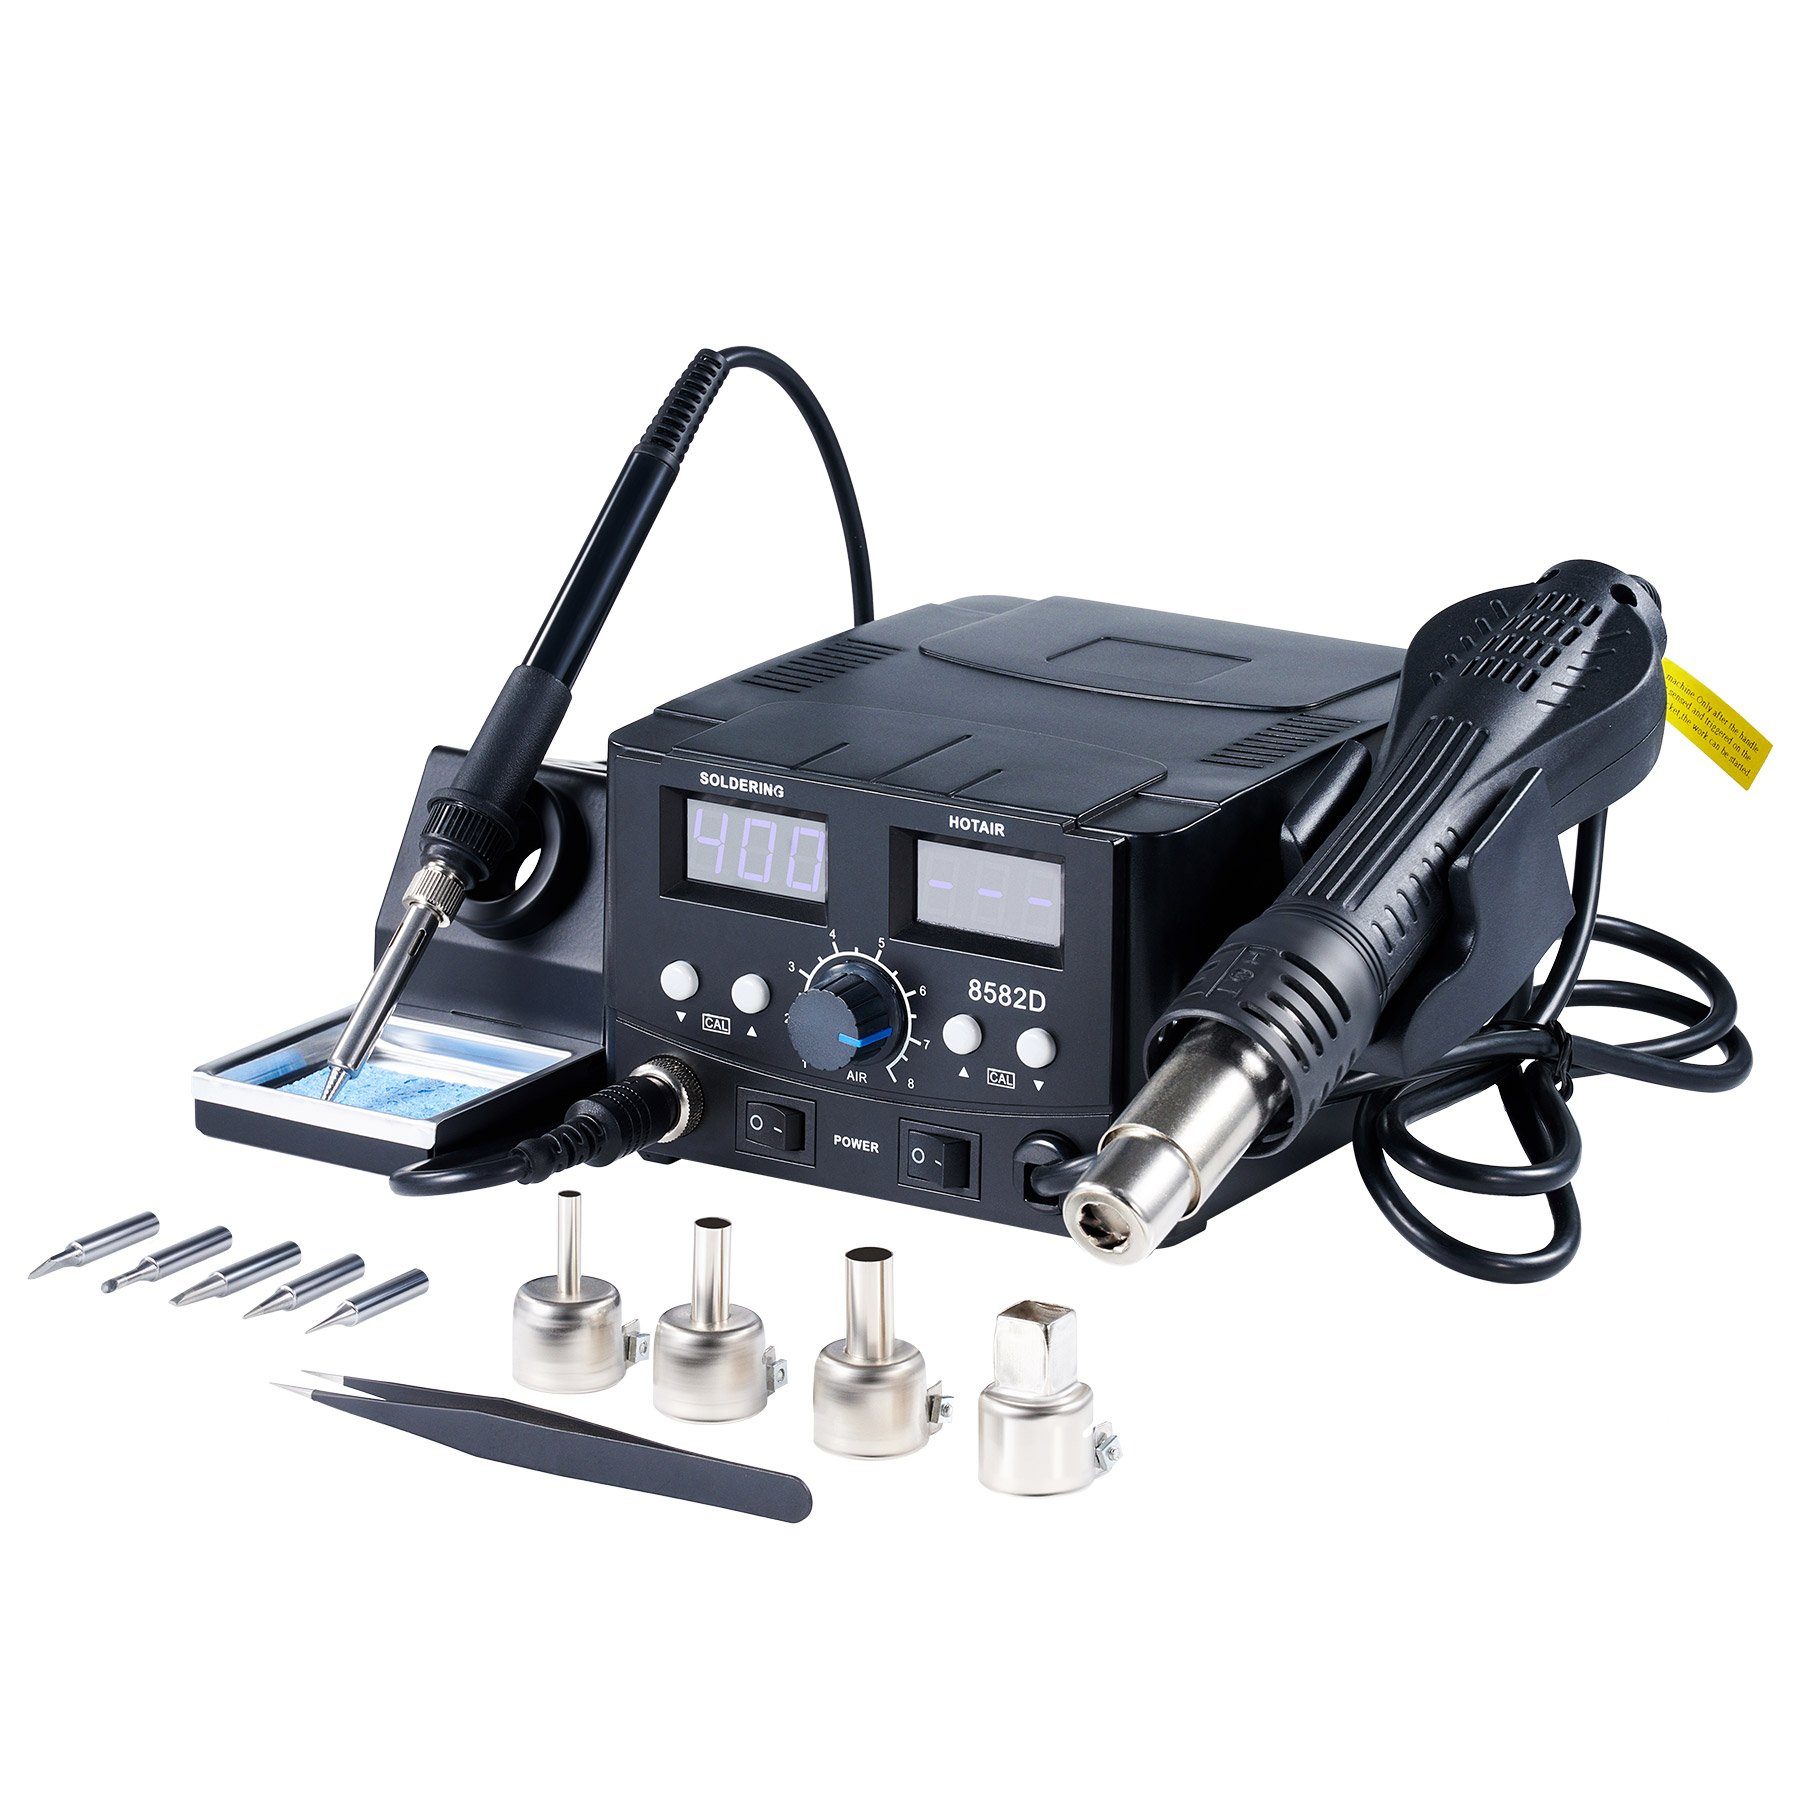 Crenex Elektroschweißgerät, 2-IN-1 Digital Lötkolben Heißluftlötstation Entlötkolben Entlötstation